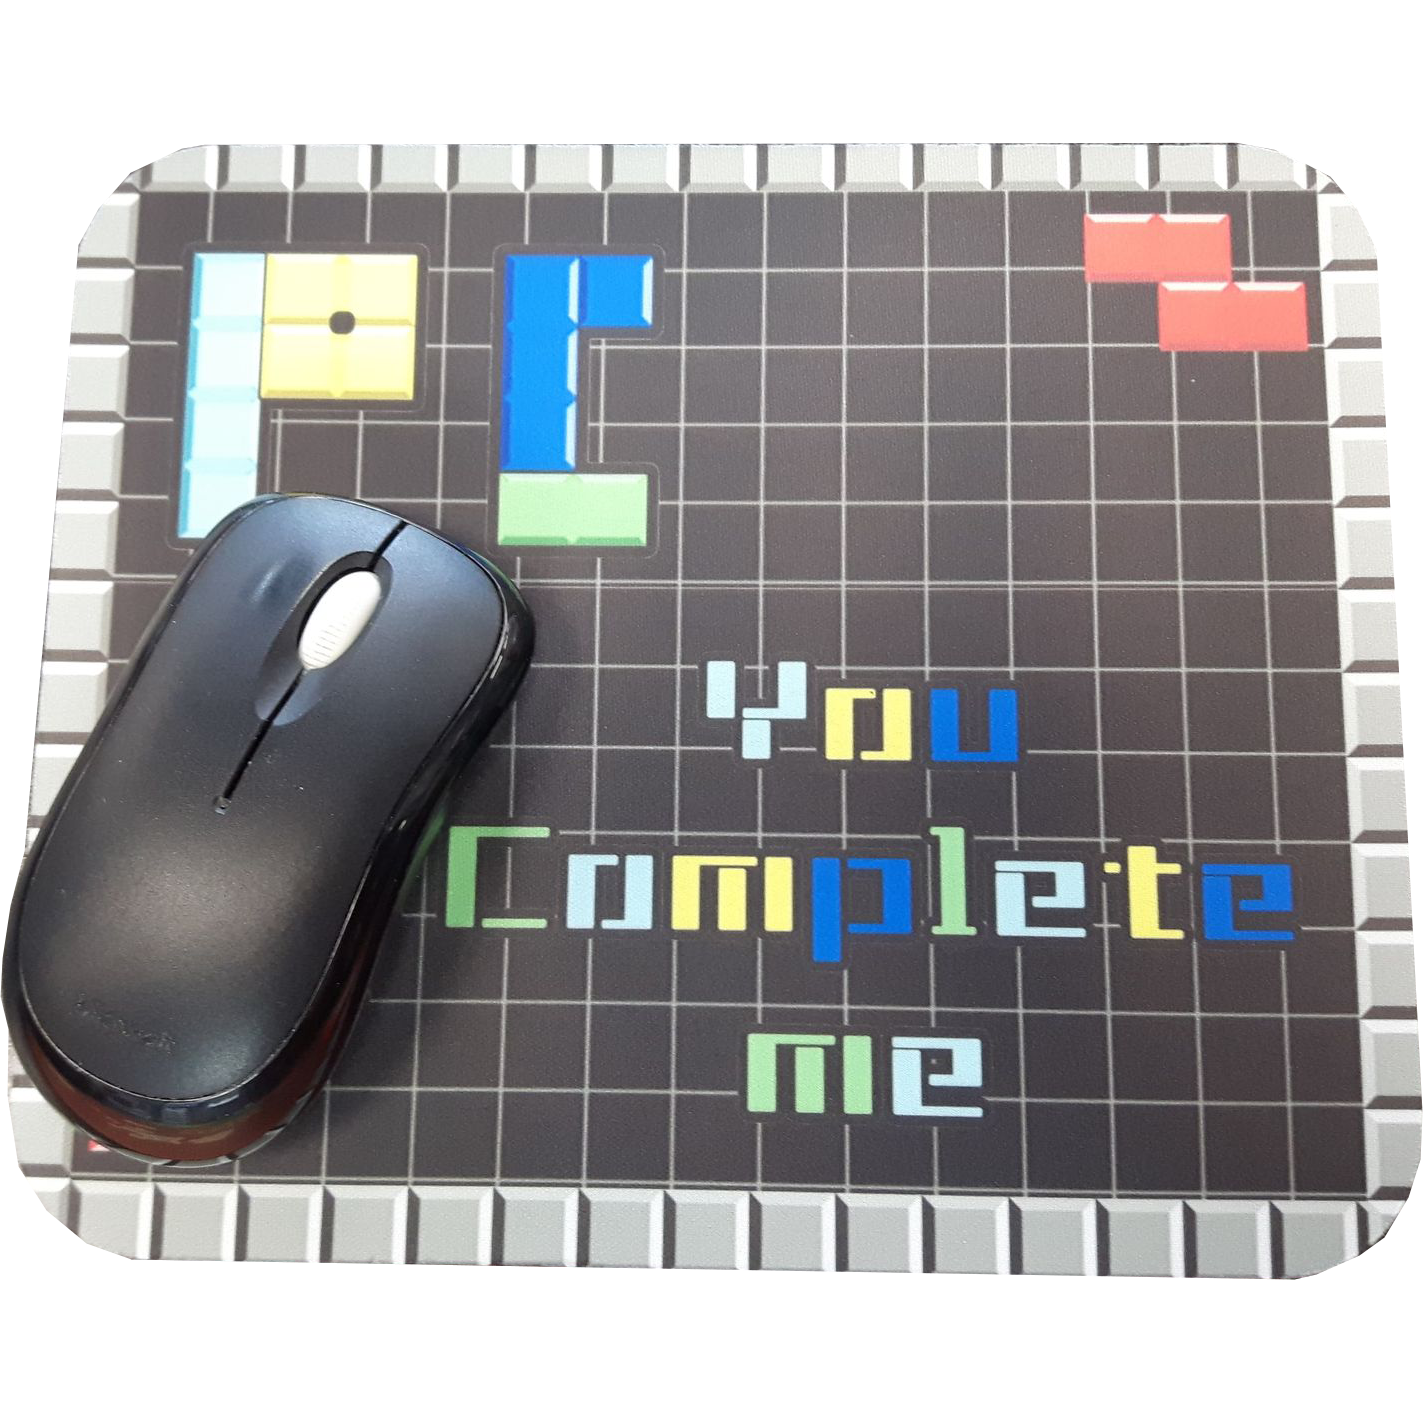 Mouse Pad - Tetris - You Complete Me